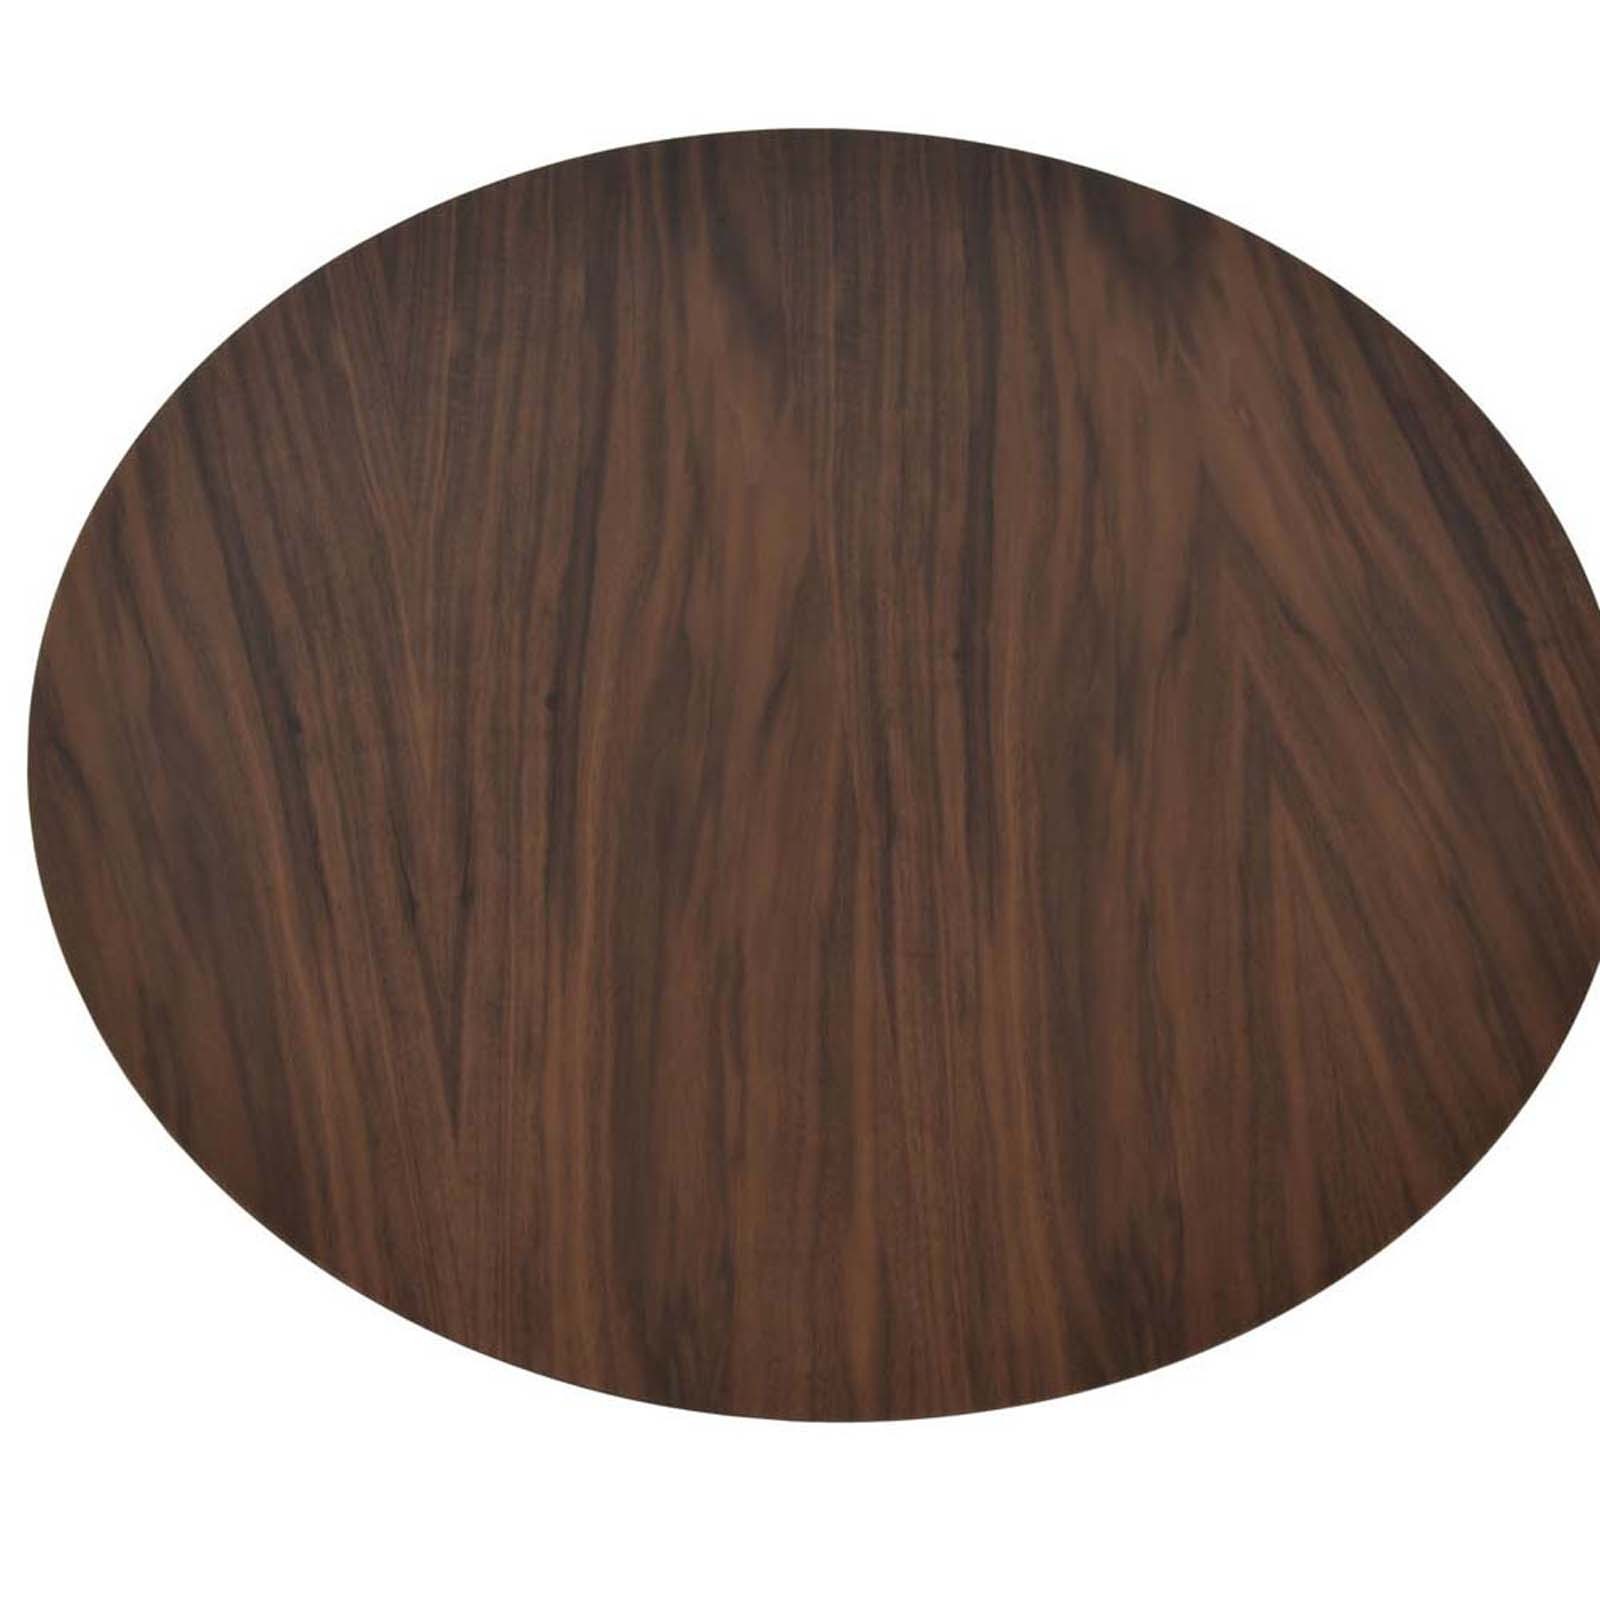 28" Walnut Veneer Finish Wood Round Table Top